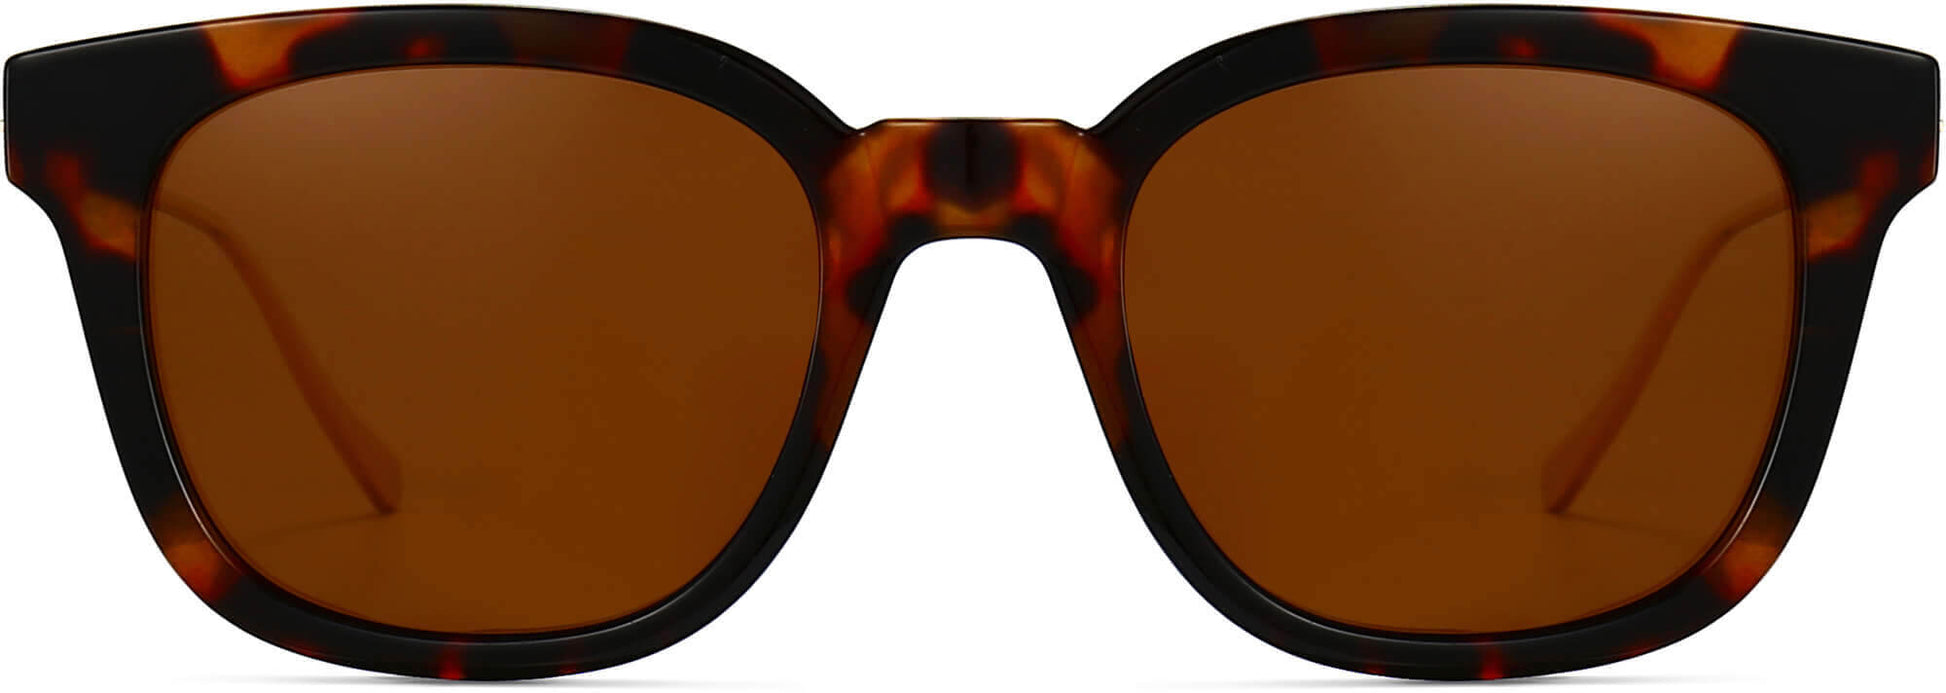 Cooper Tortoise Plastic Sunglasses from ANRRI, front view